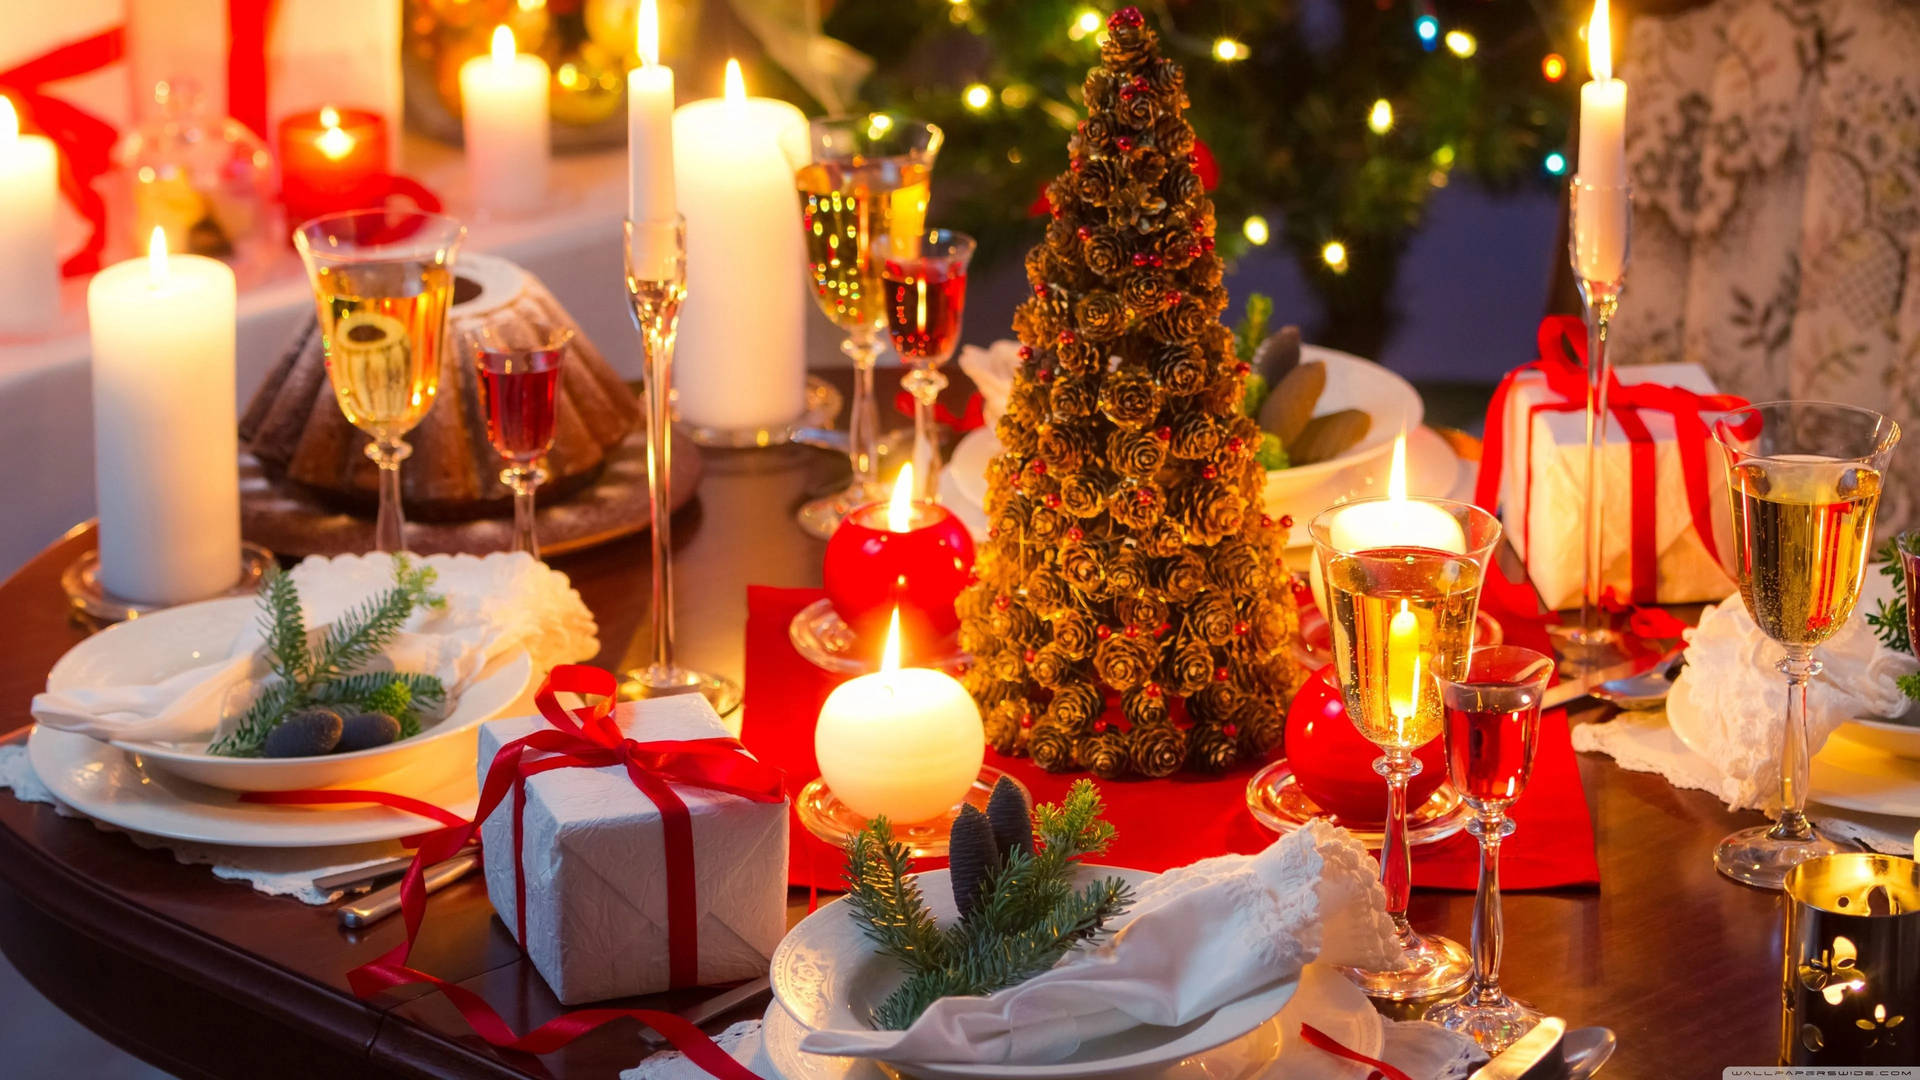 Candle-light Christmas Dinner Table Setting Wallpaper